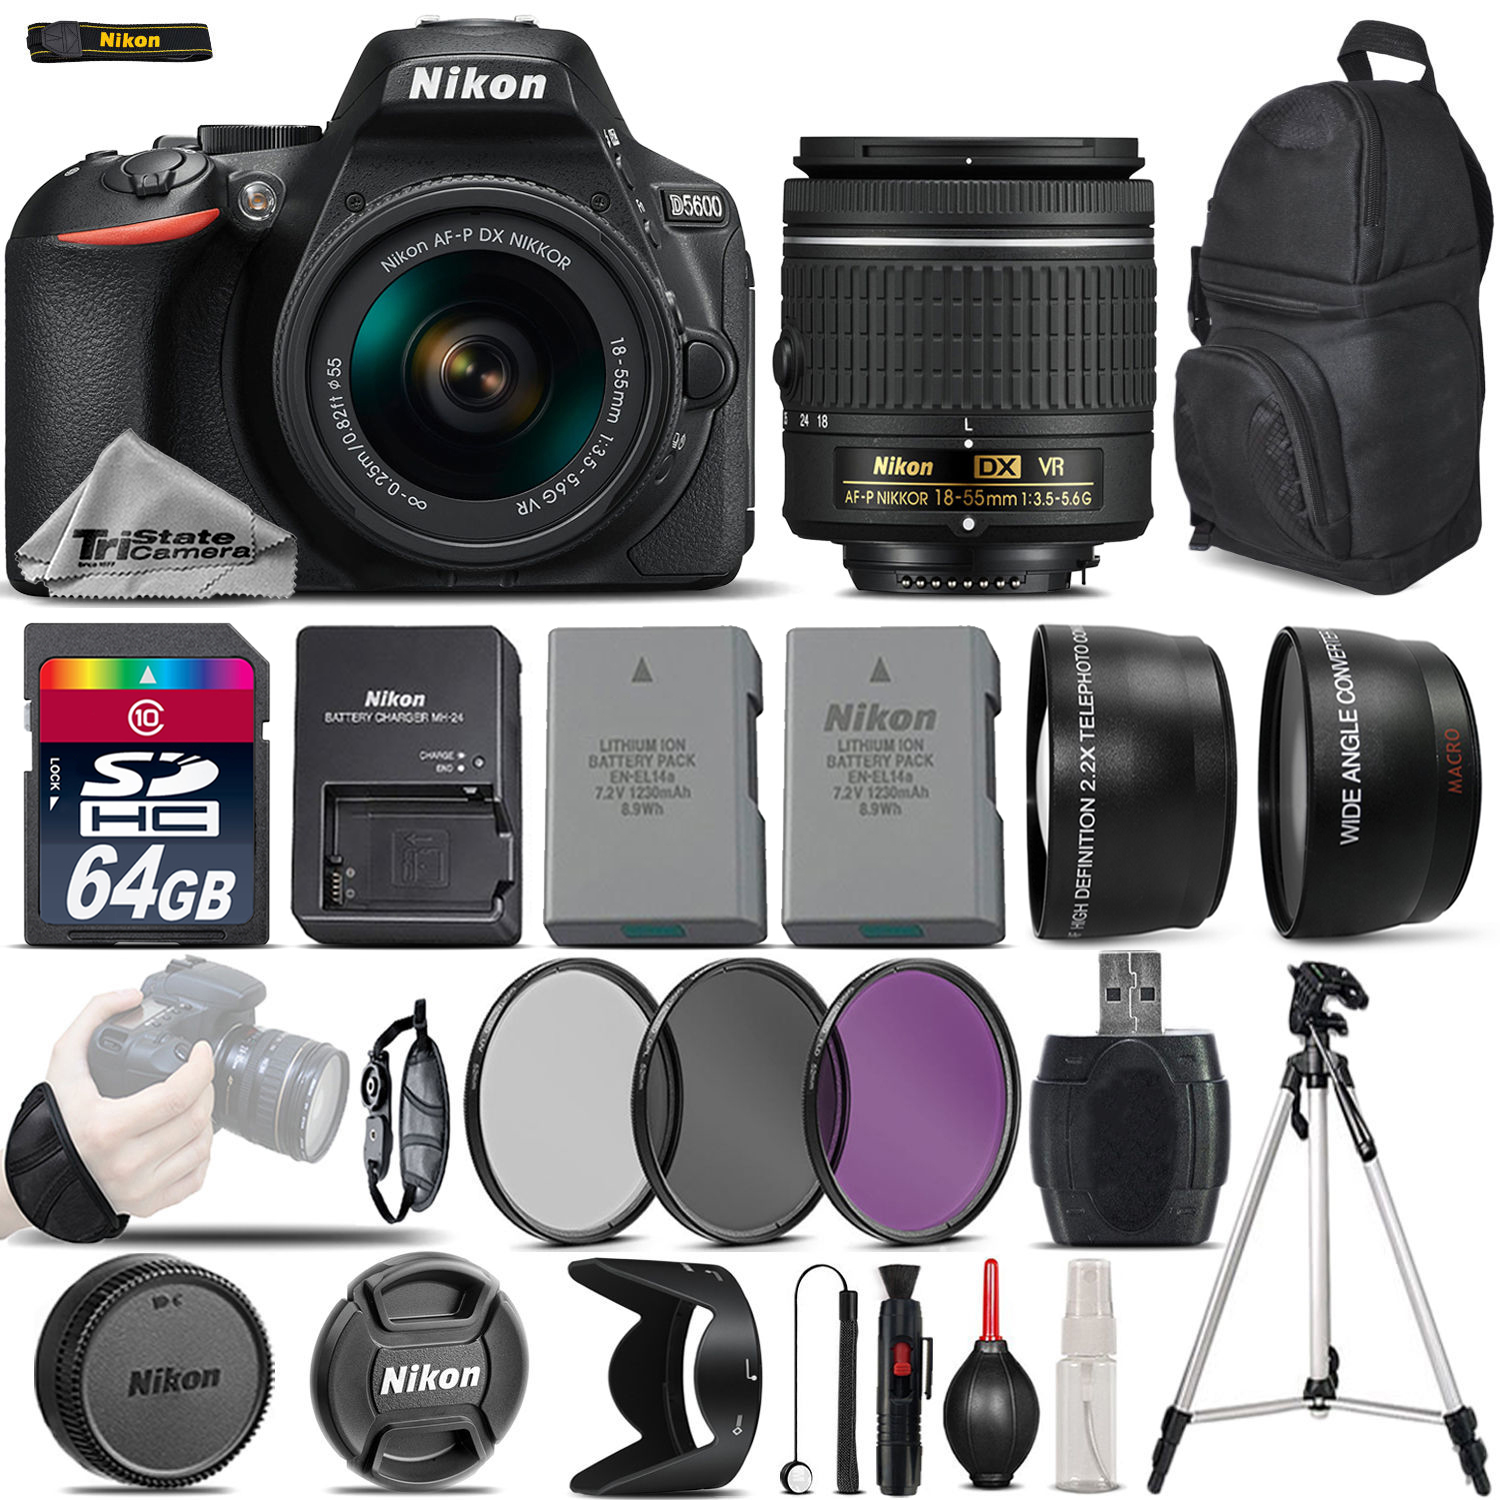 D5600 Digital SLR Camera +3 Lens 18-55mm VR + Extra Battery - 64GB Bundle *FREE SHIPPING*